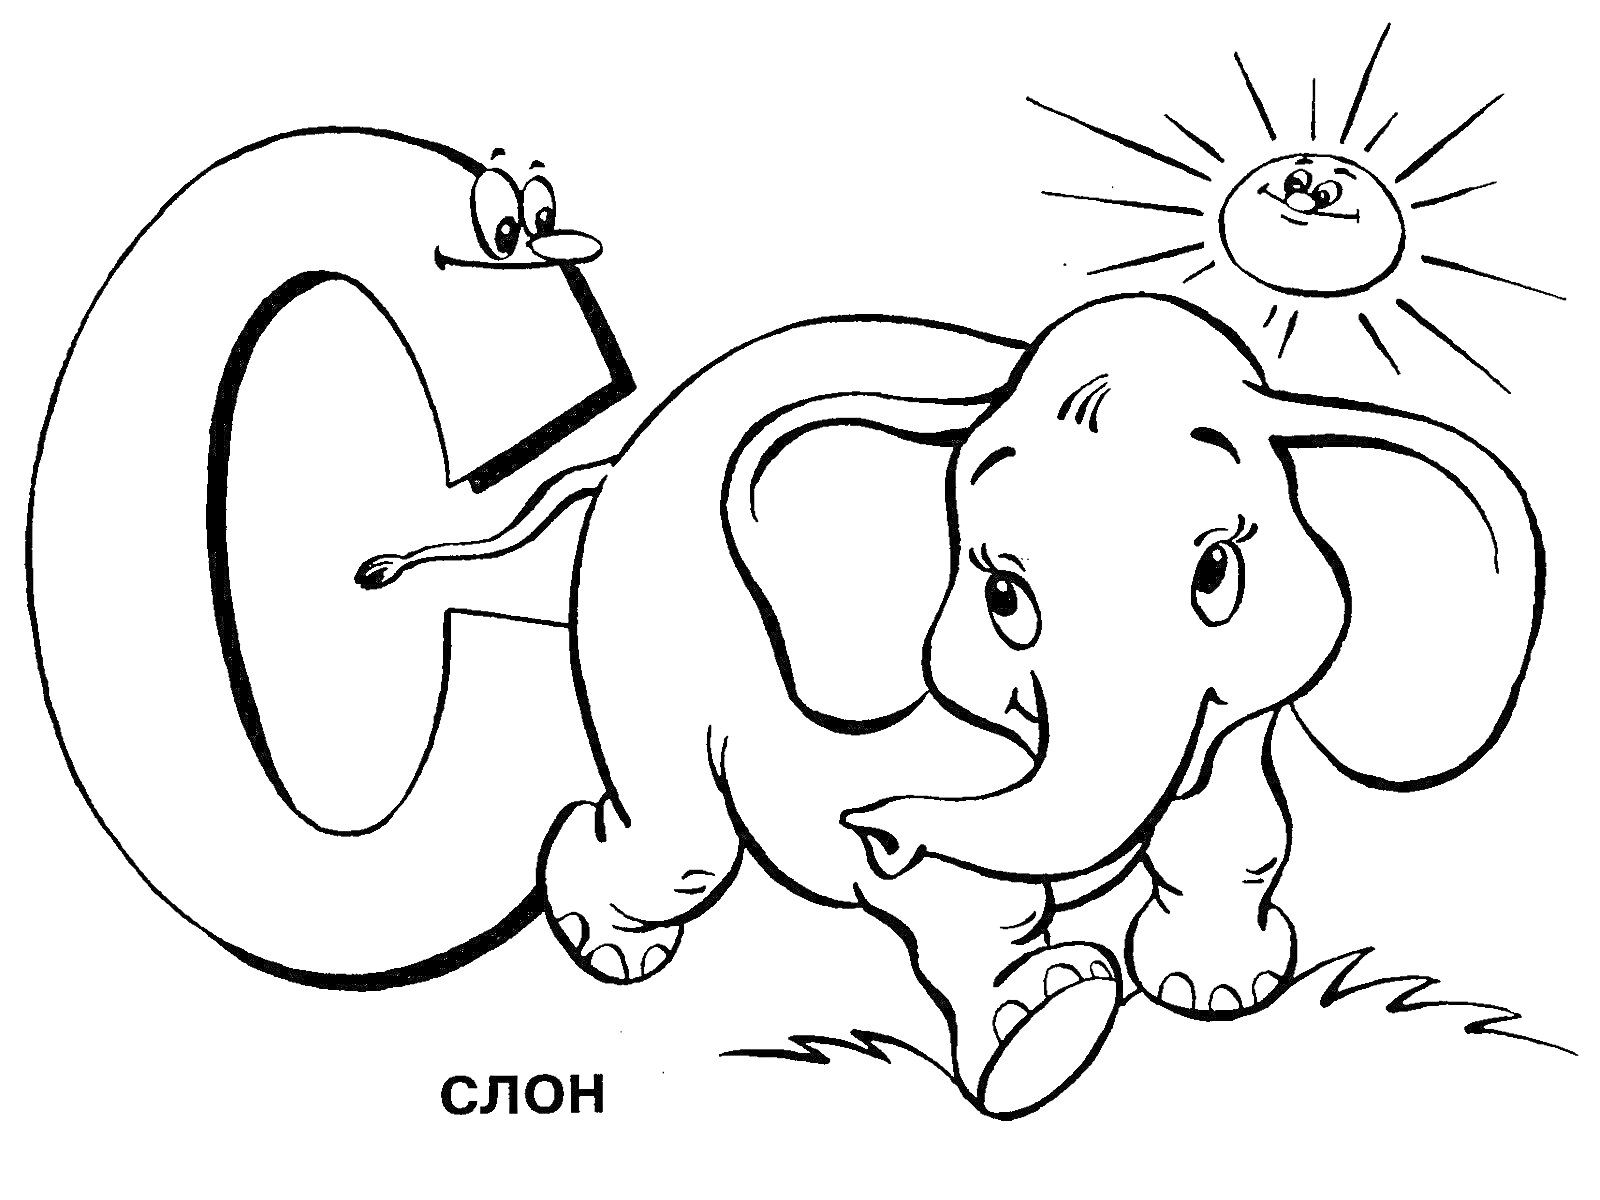 На раскраске изображено: Буква С, Слон, Солнце, Червяк, Алфавит, Учим буквы